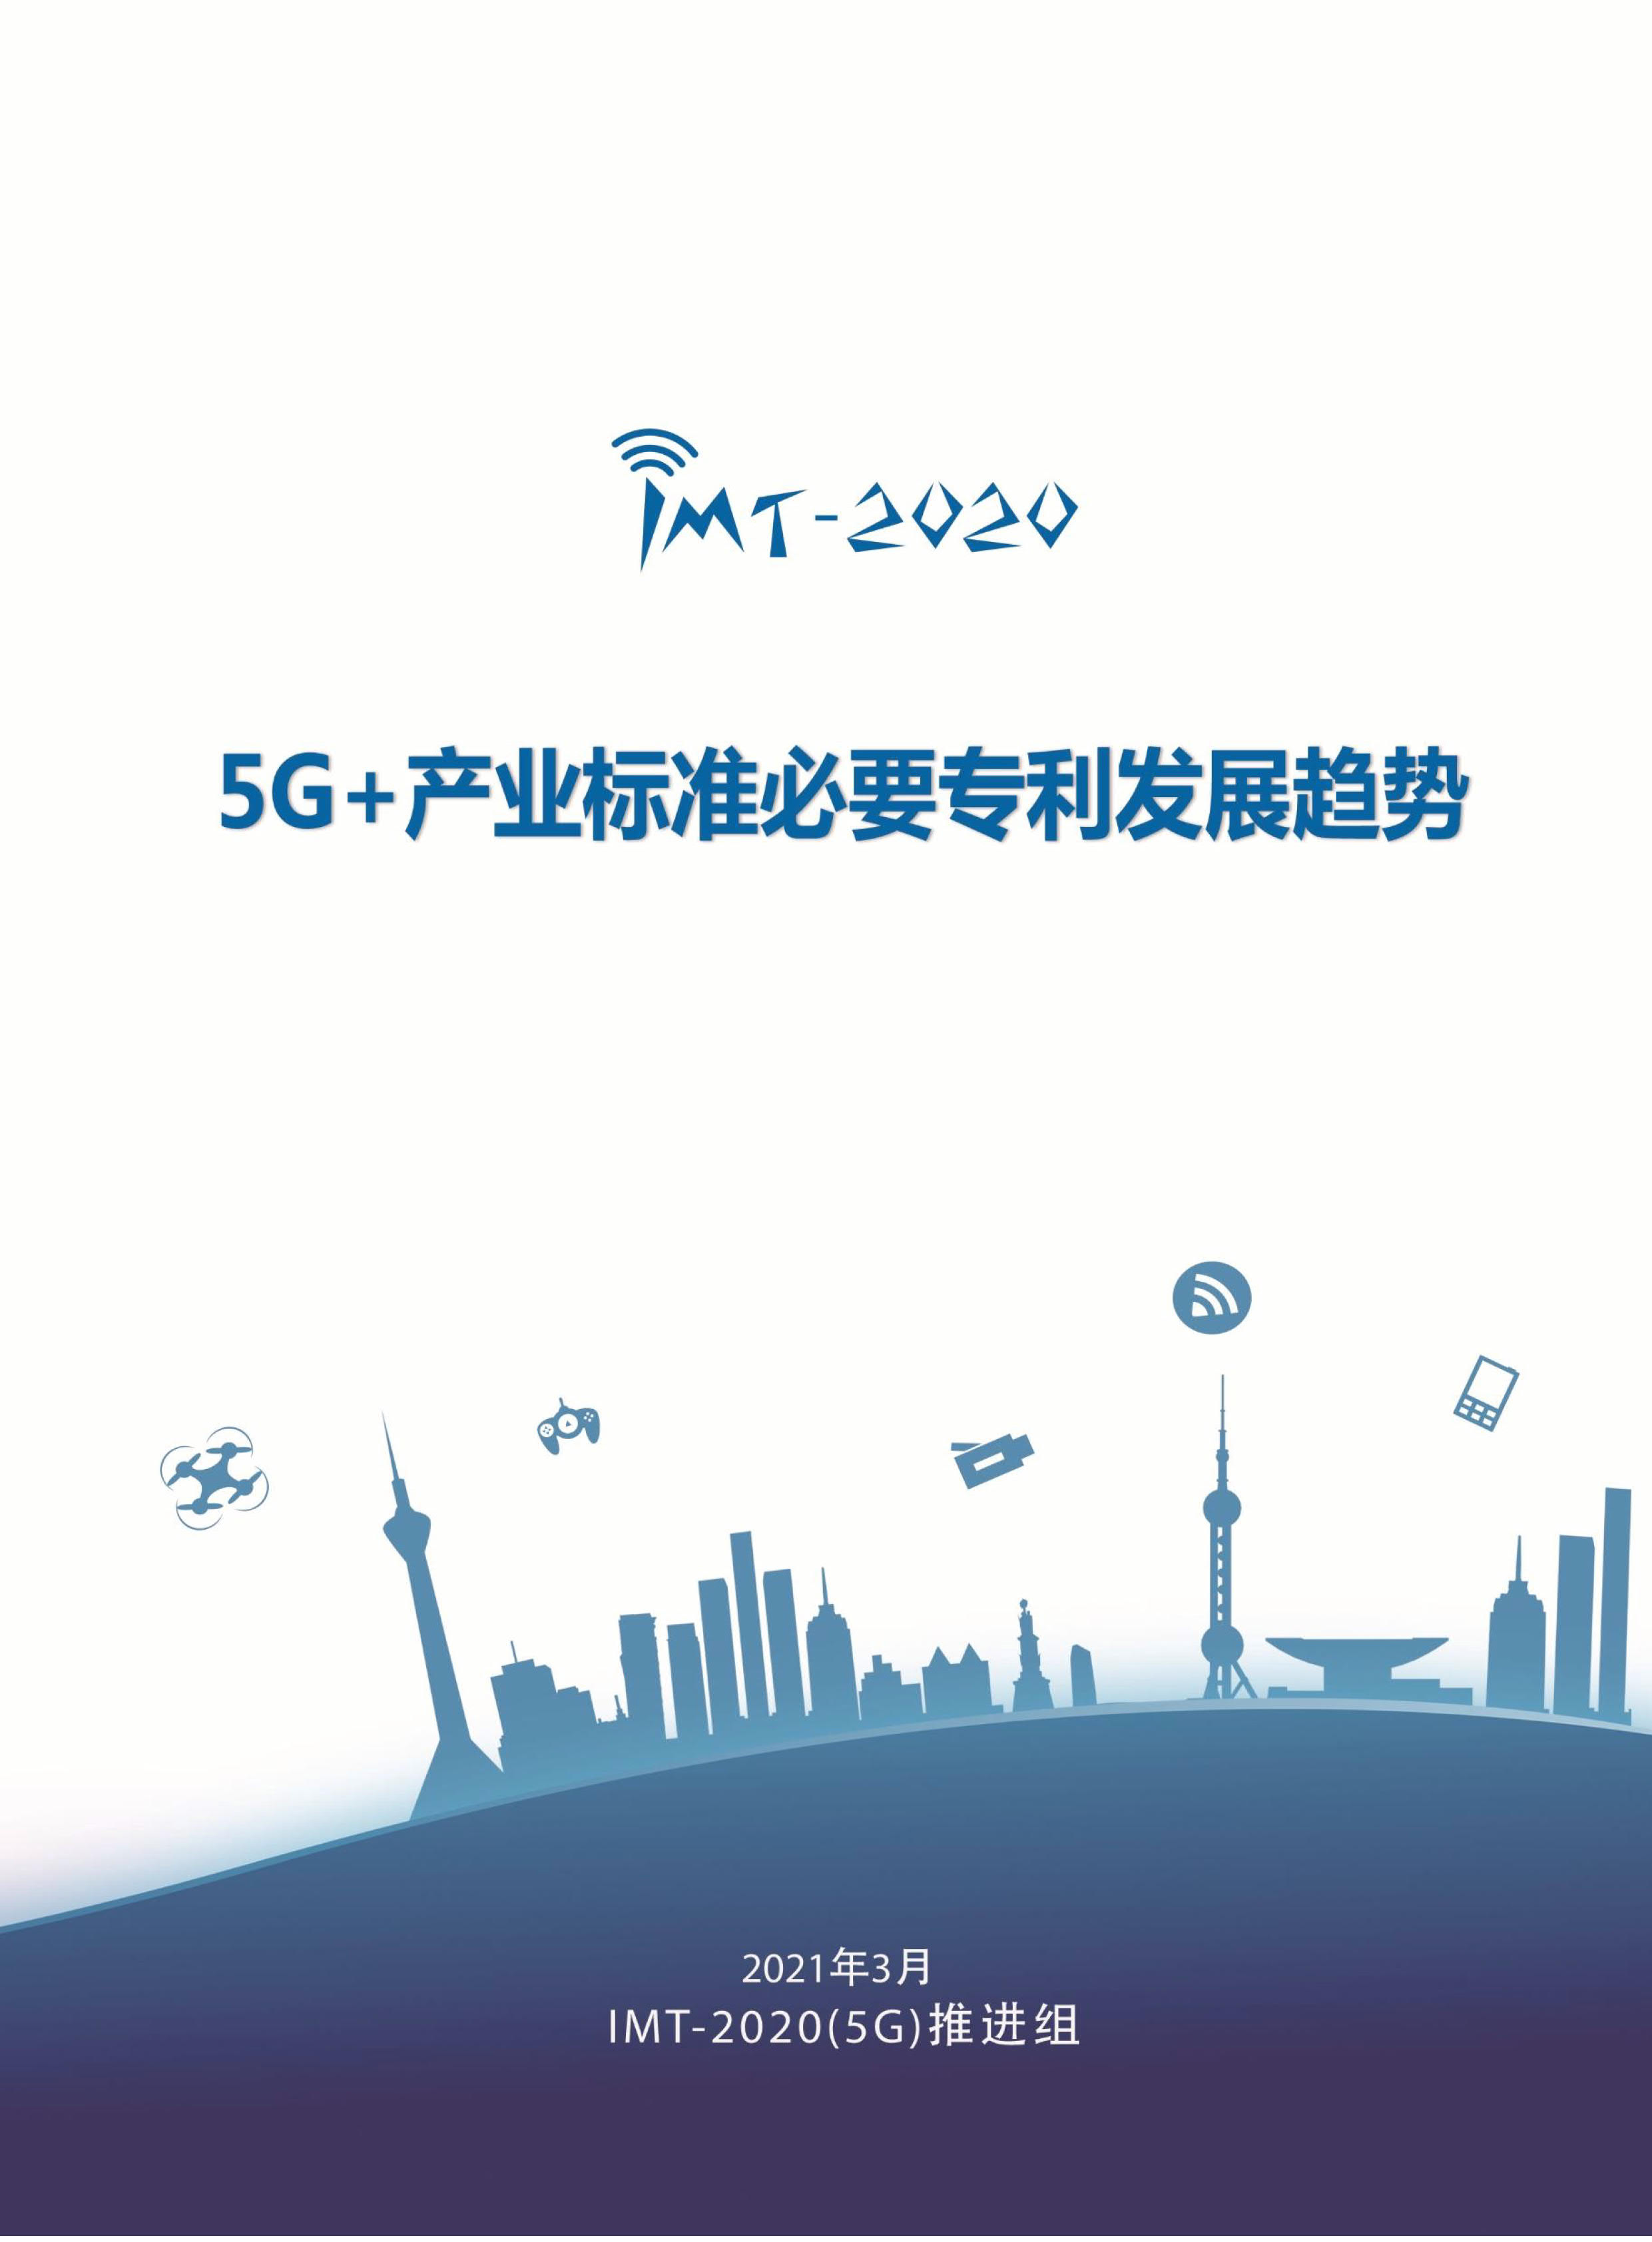 5G+产业标准必要专利发展趋势首页.jpg